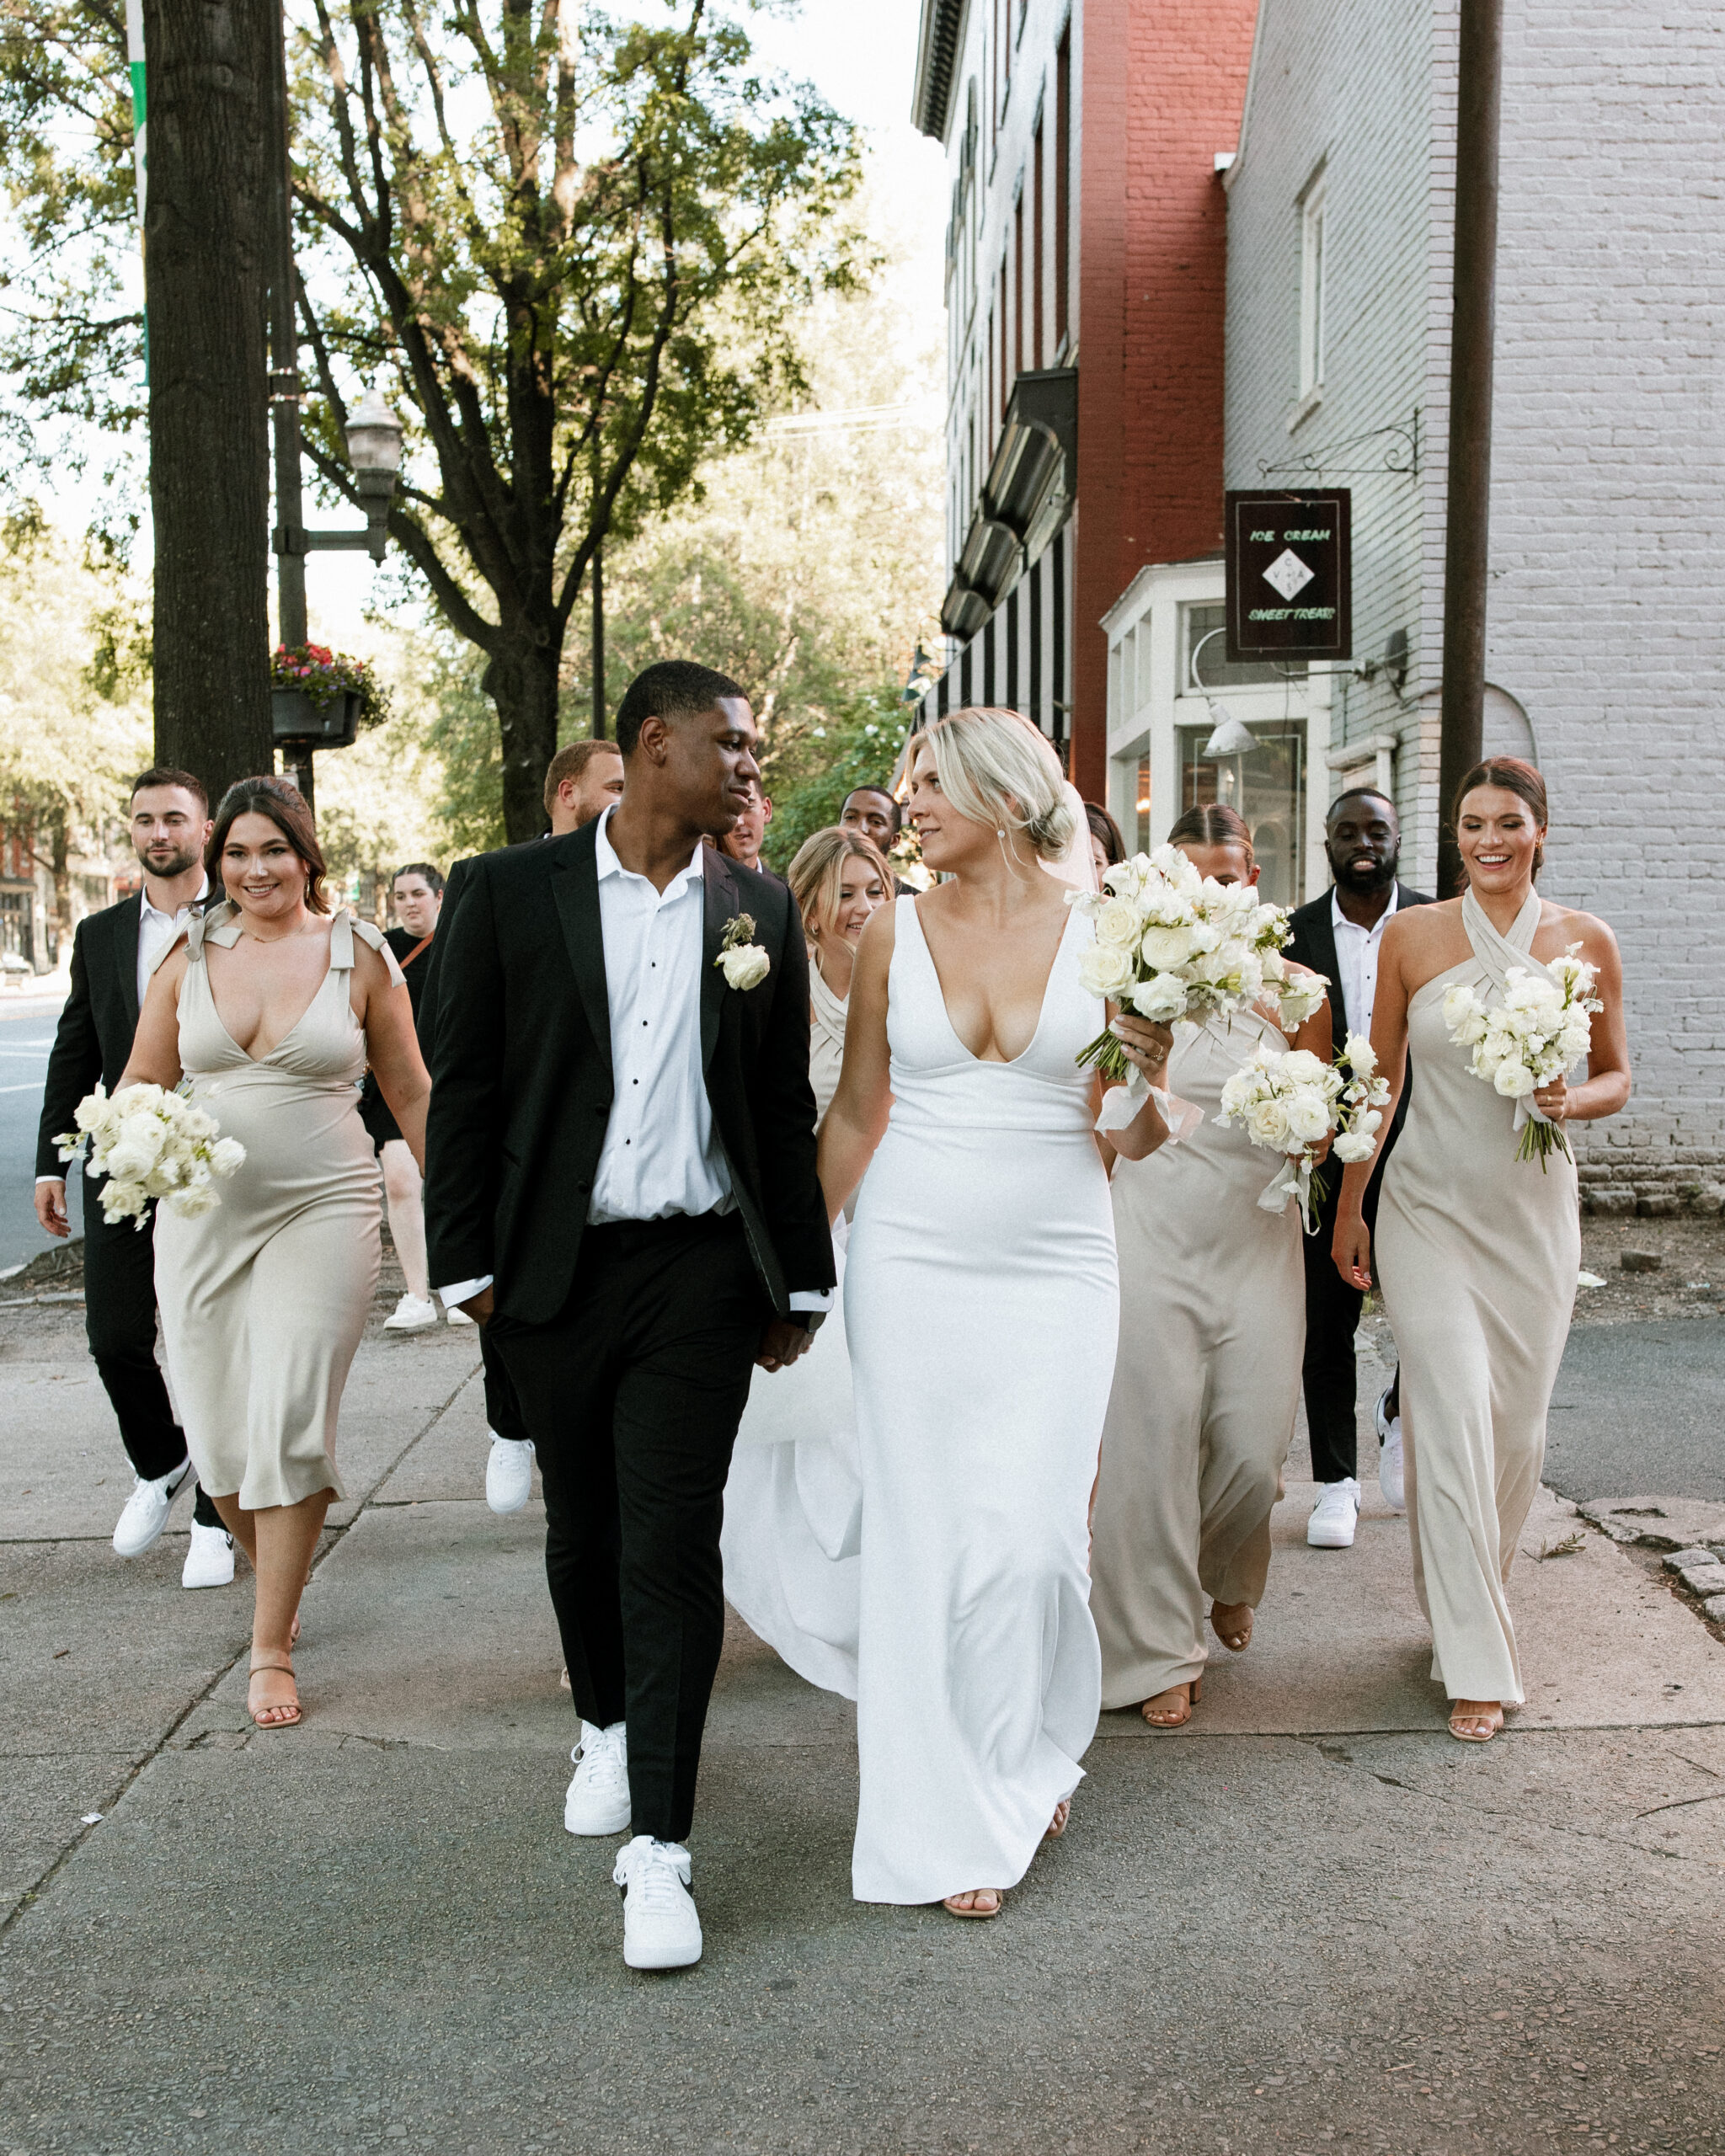 Wedding Party Walking on Sidewalk in Downtown Richmond